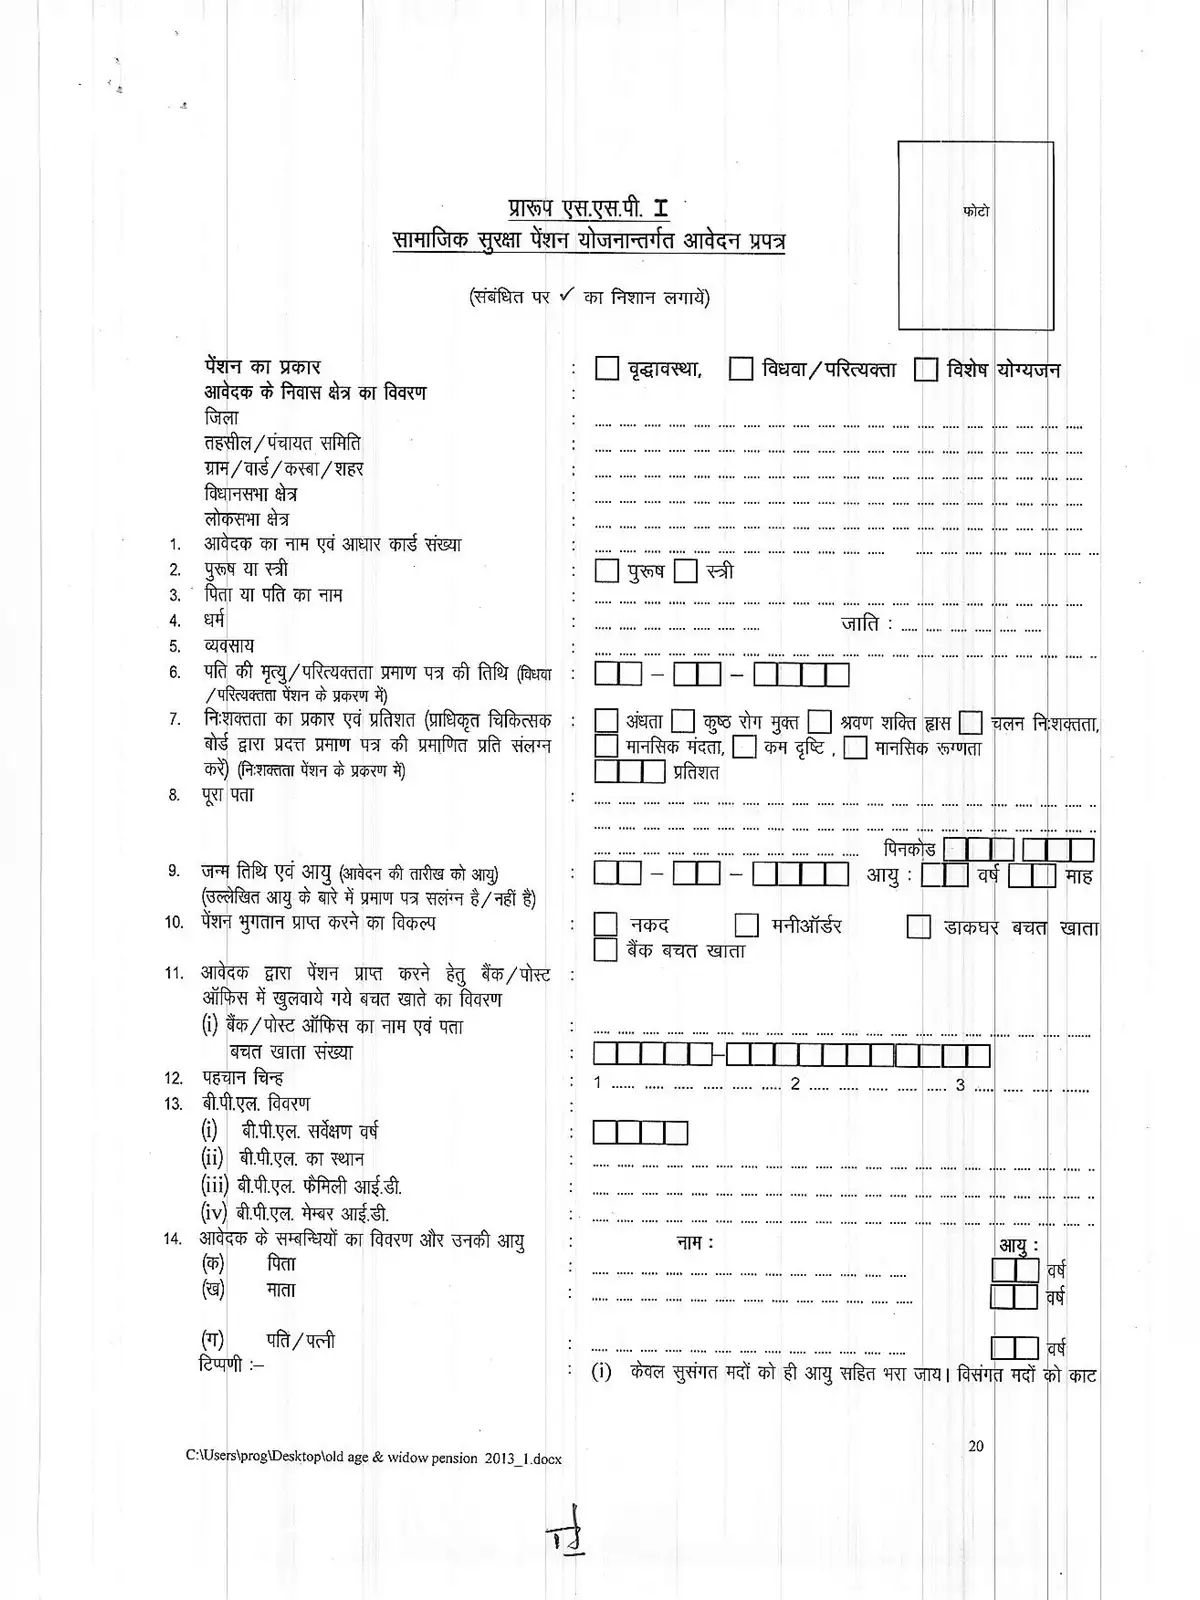 Rajasthan( RAJSSP) Pension Application Form